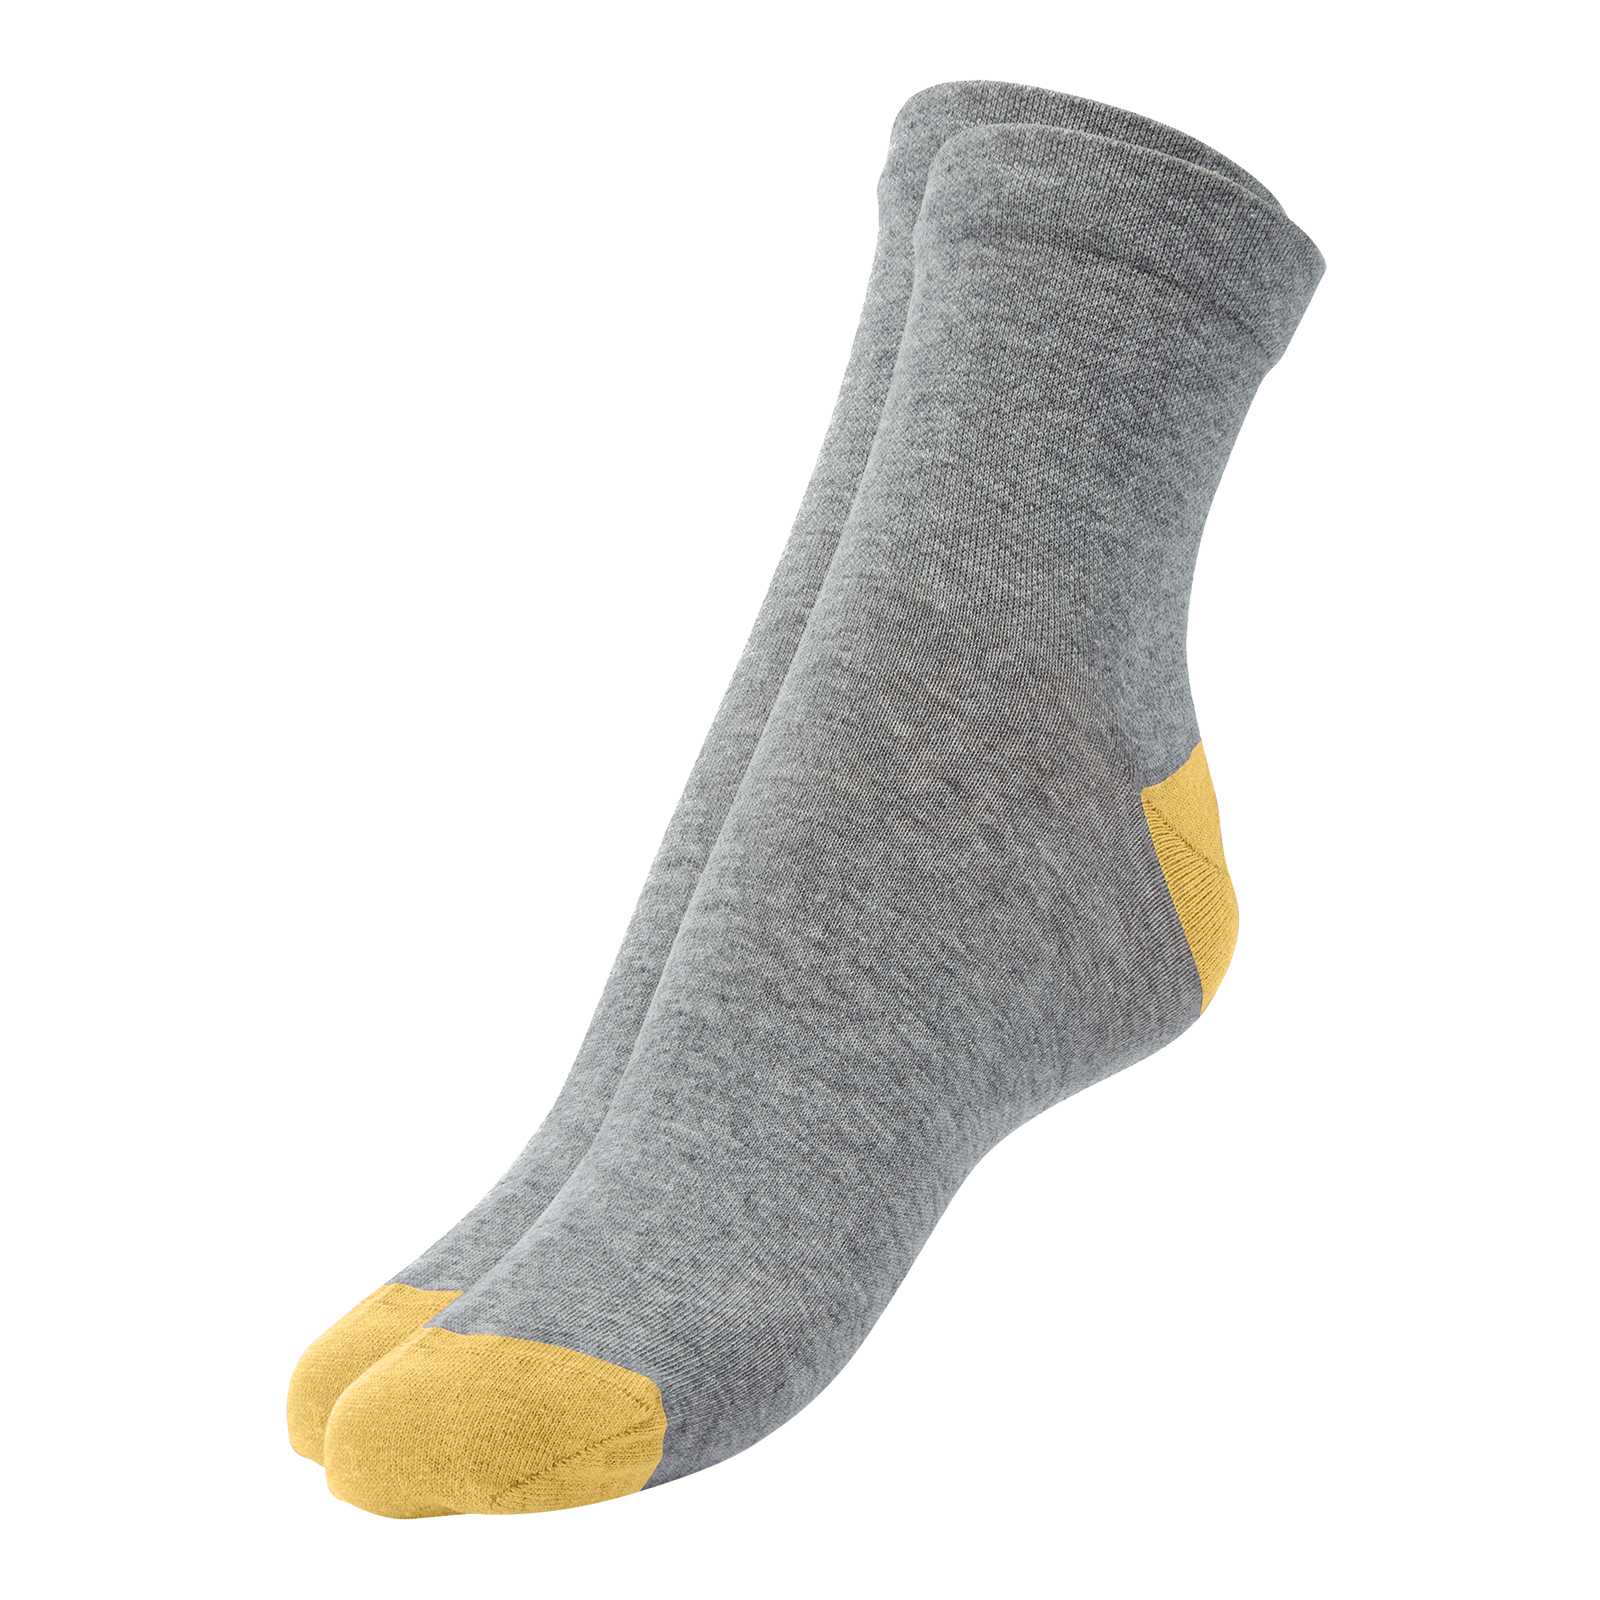 mahabis socks in larvik light grey x skane yellow